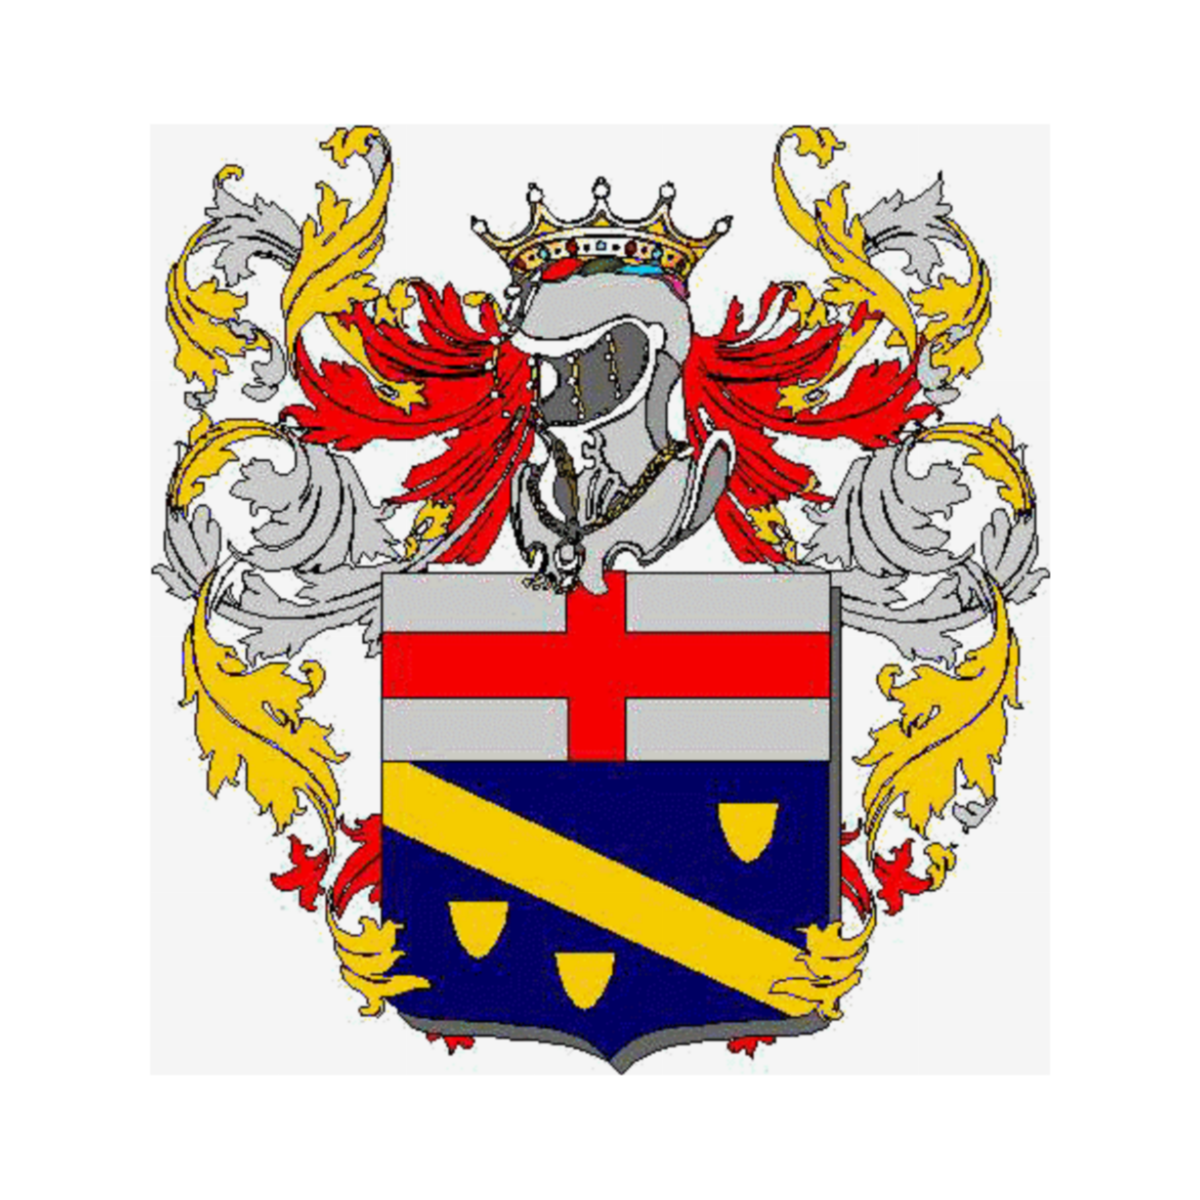 Wappen der FamilieBrami, Cini,Cintii,Cintij,Cintij del rione Trastevere